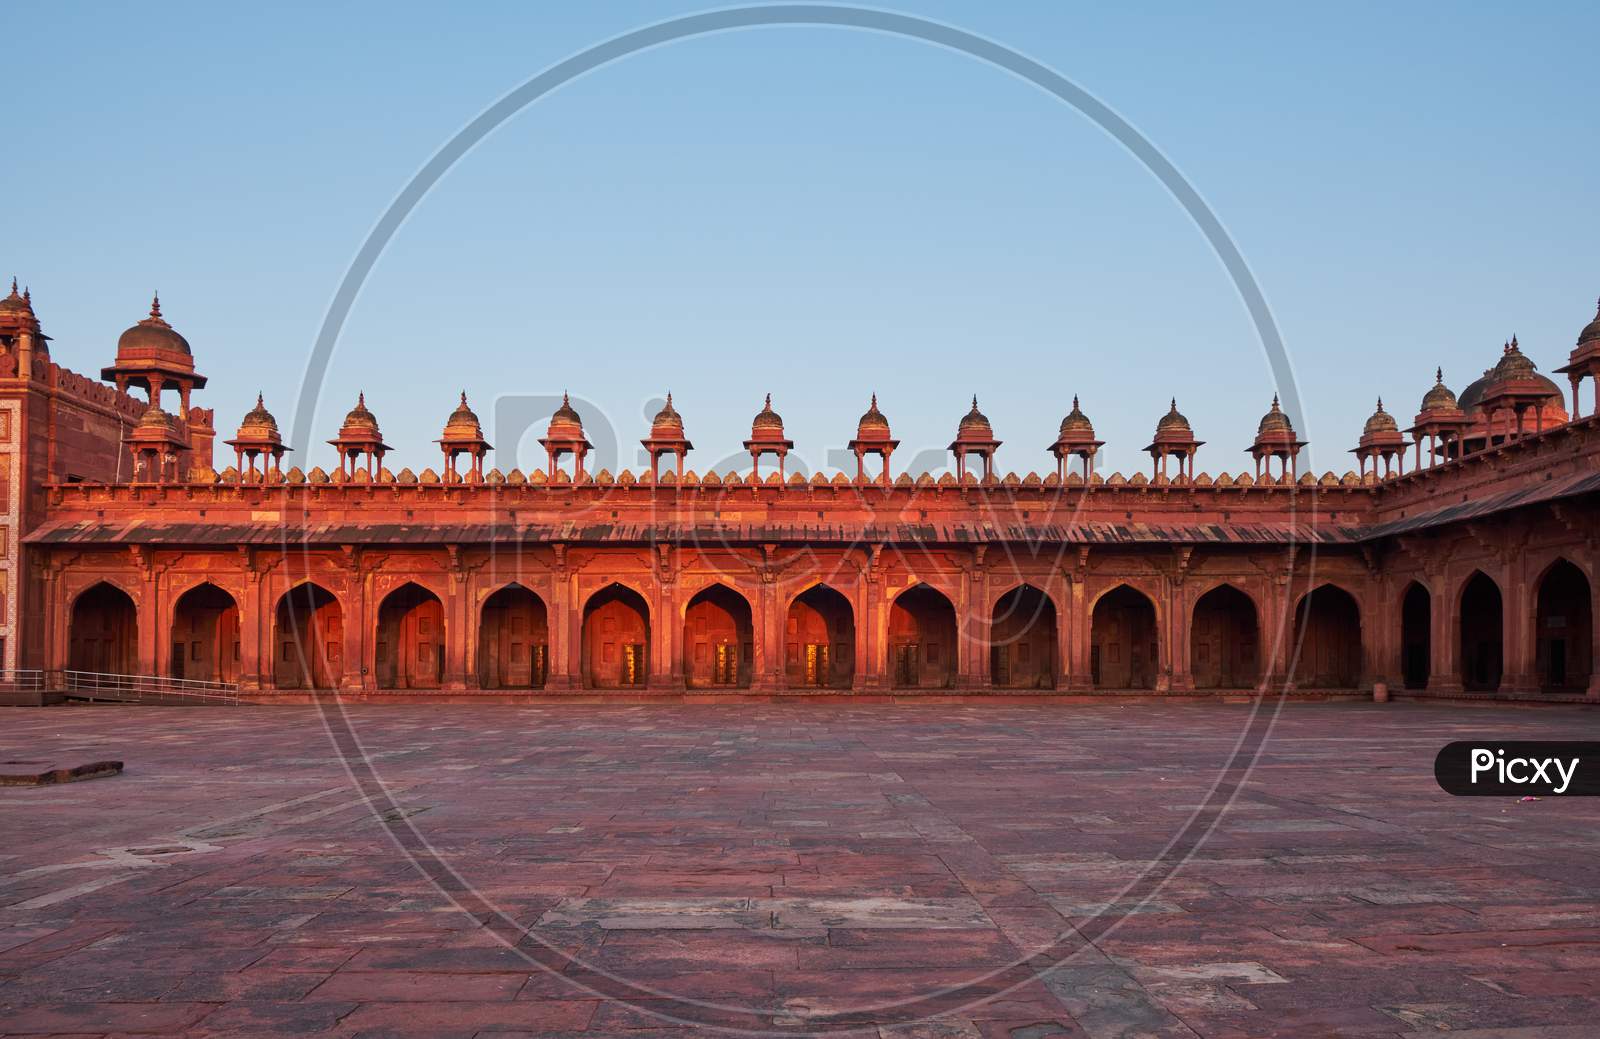 Jama Masjid Mosque At Fatehpur Sikri In Agra, India